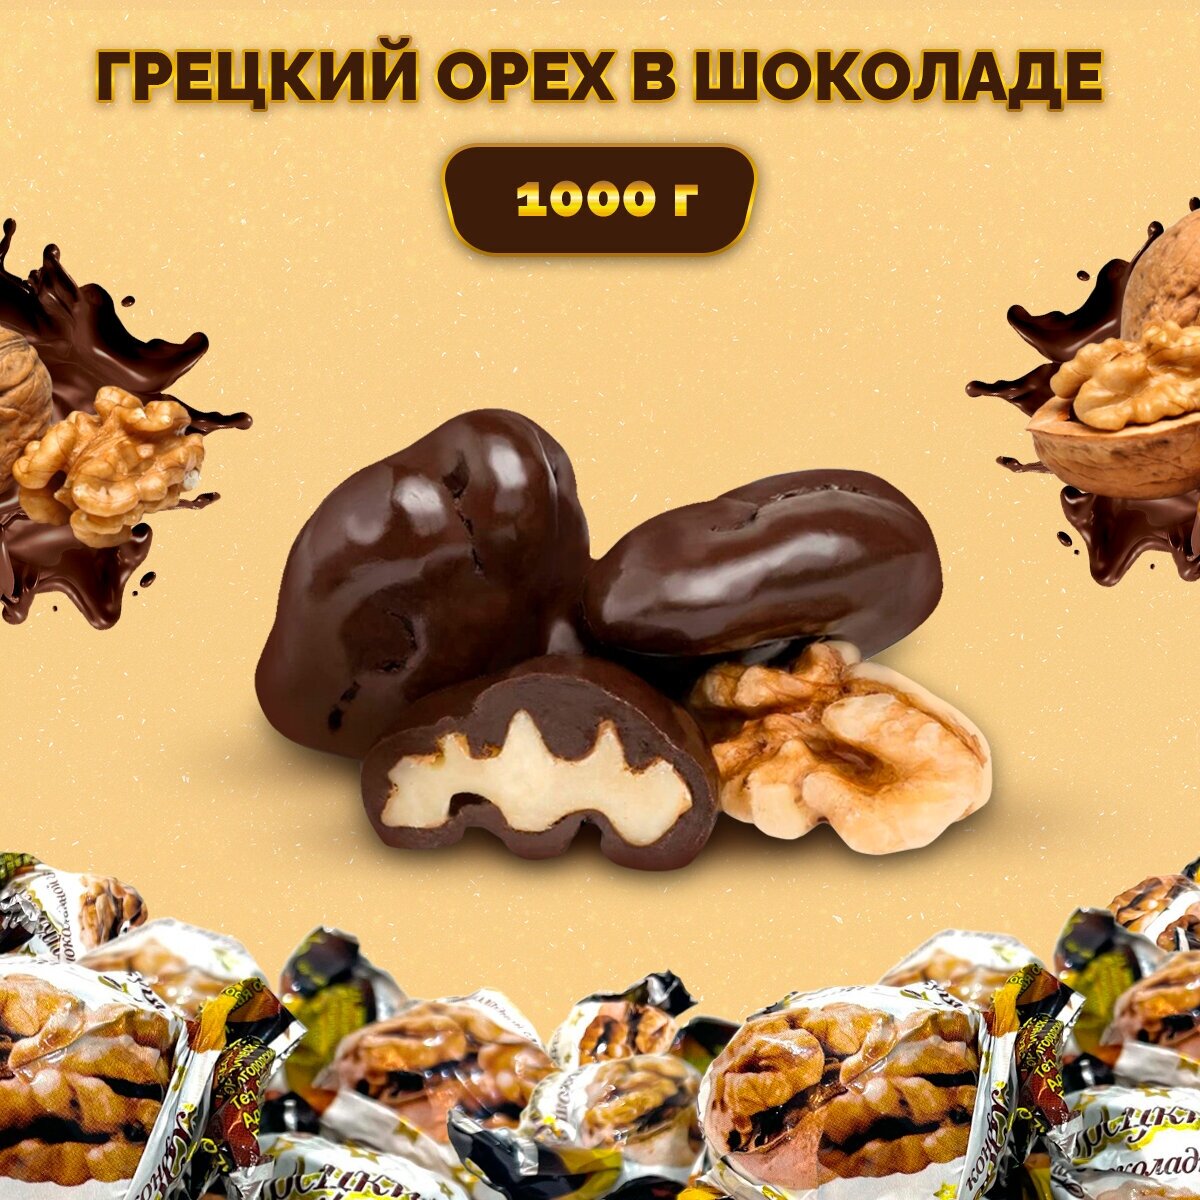 Грецкий орех в шоколаде 1000гр.VARDI - фотография № 1